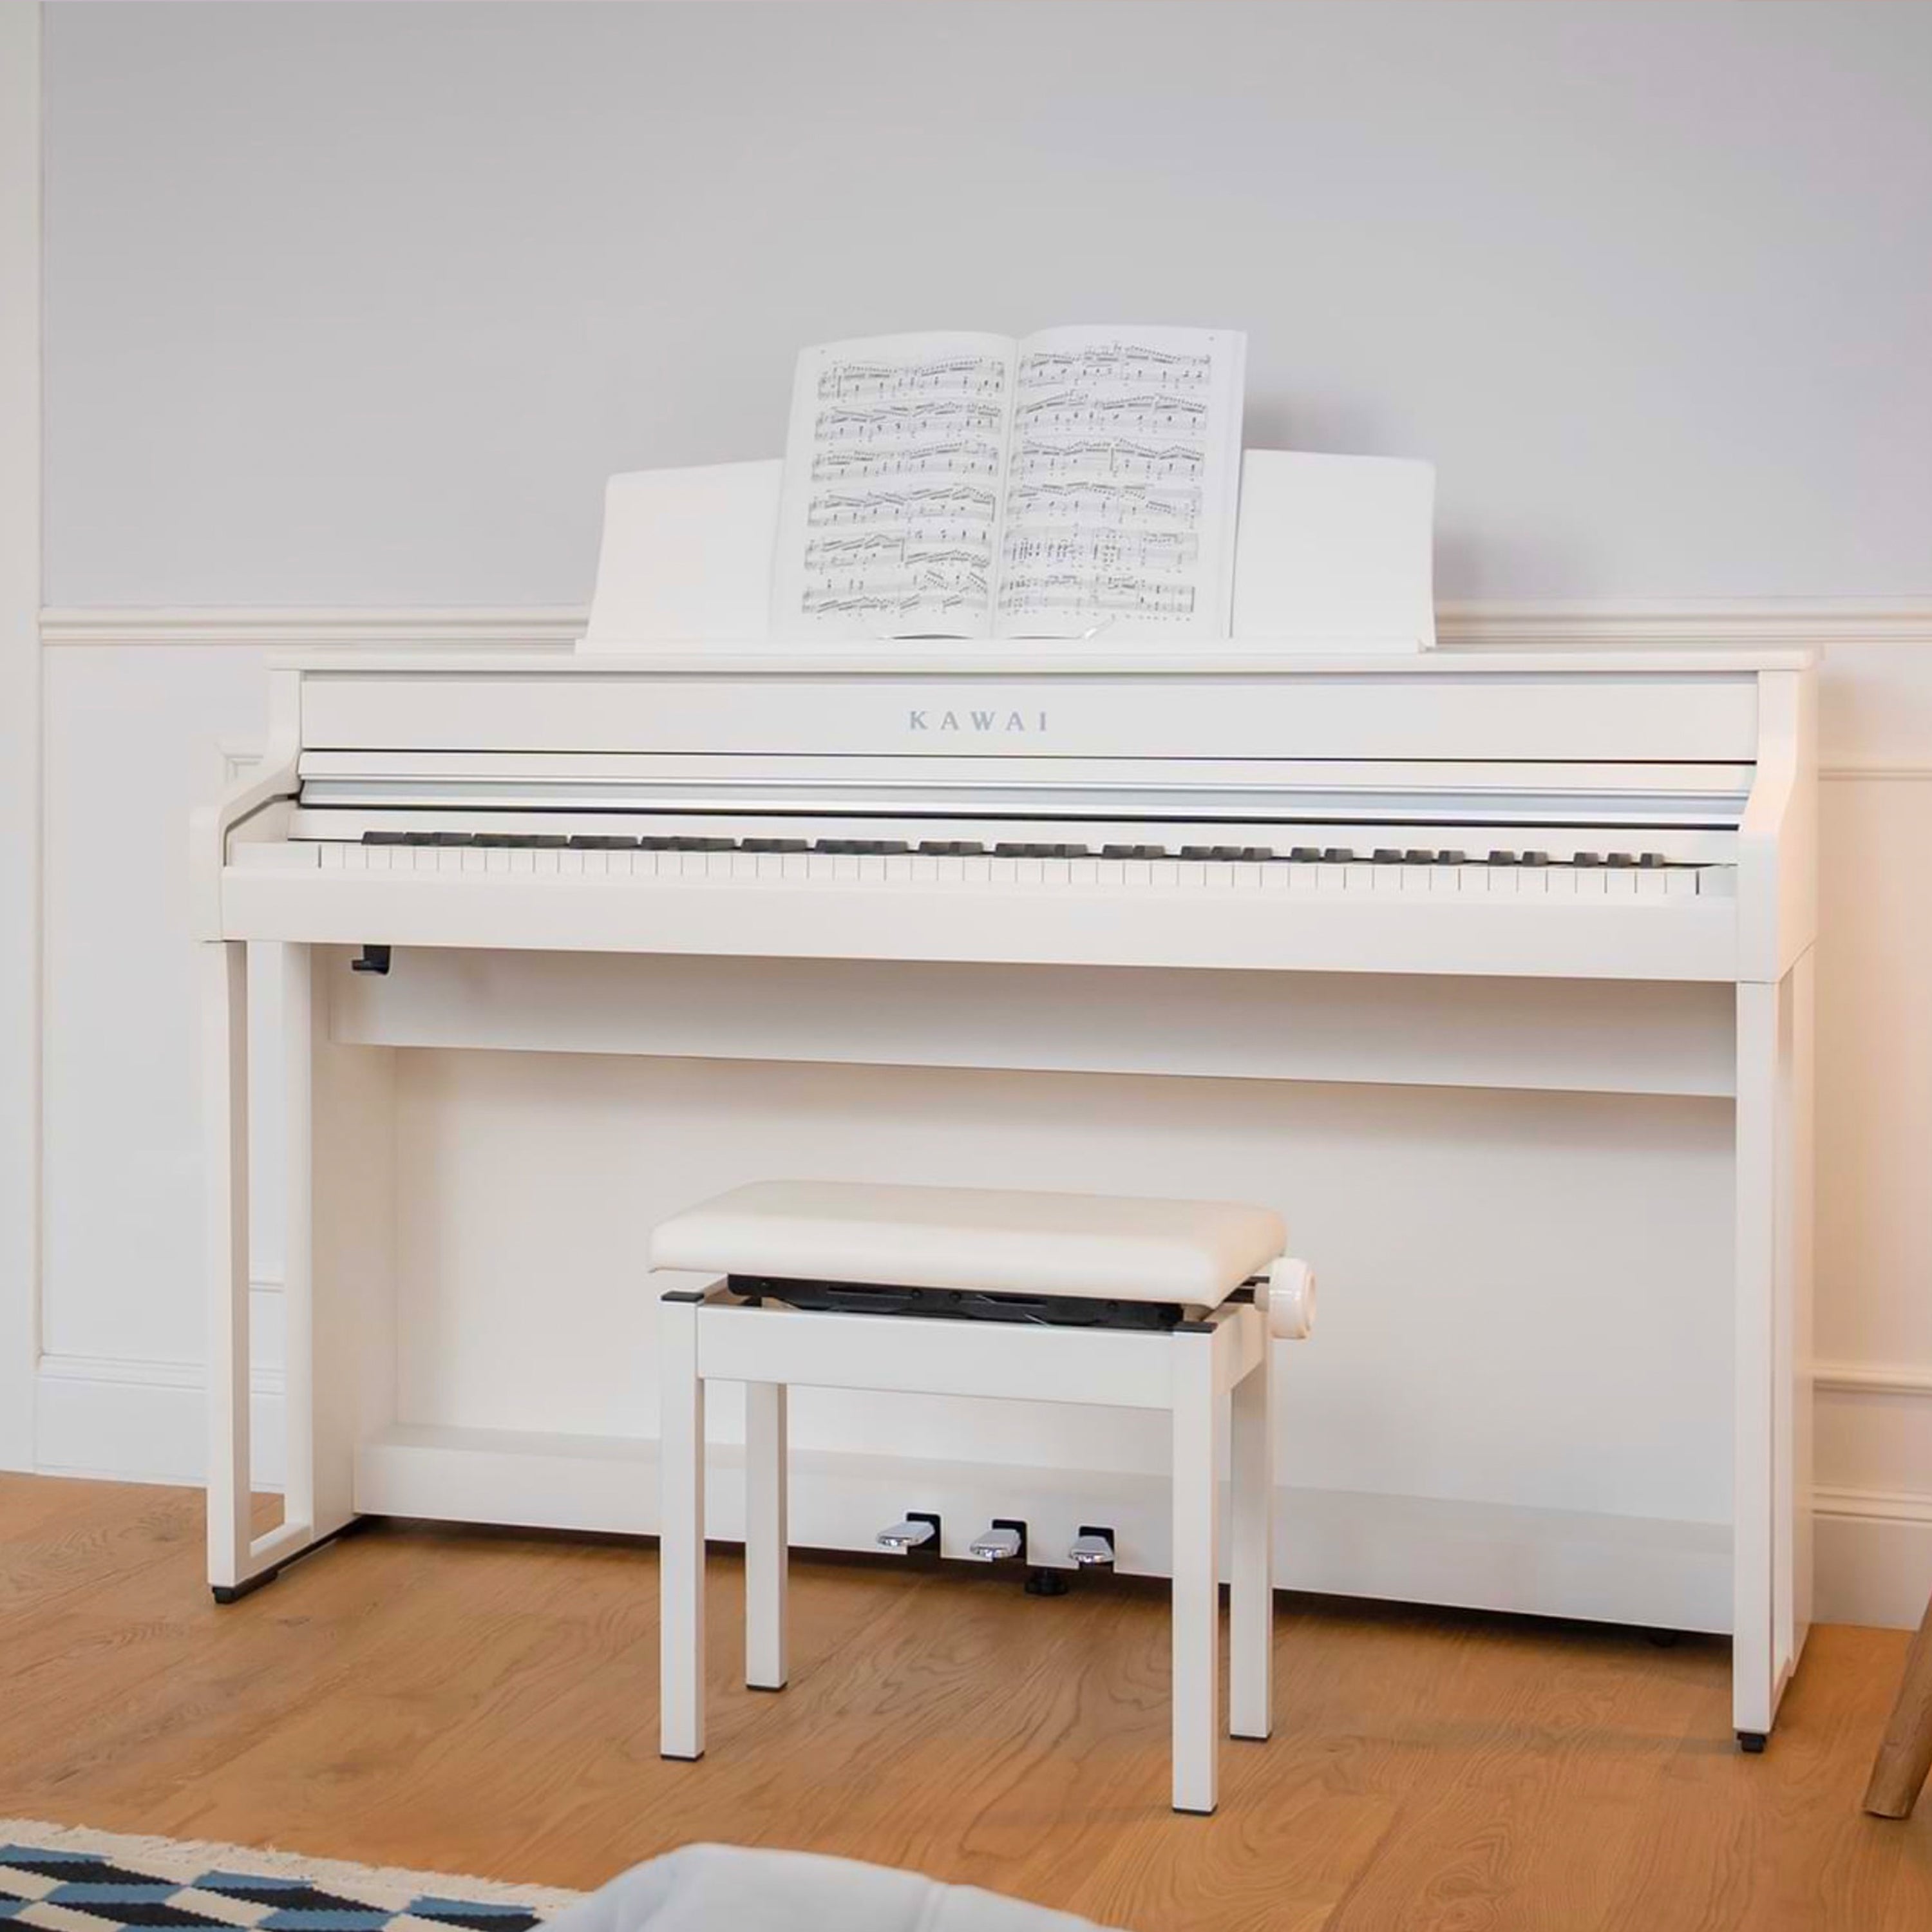 Kawai CA501 Concert Artist Digital Piano - Satin White - Left angle in a living room